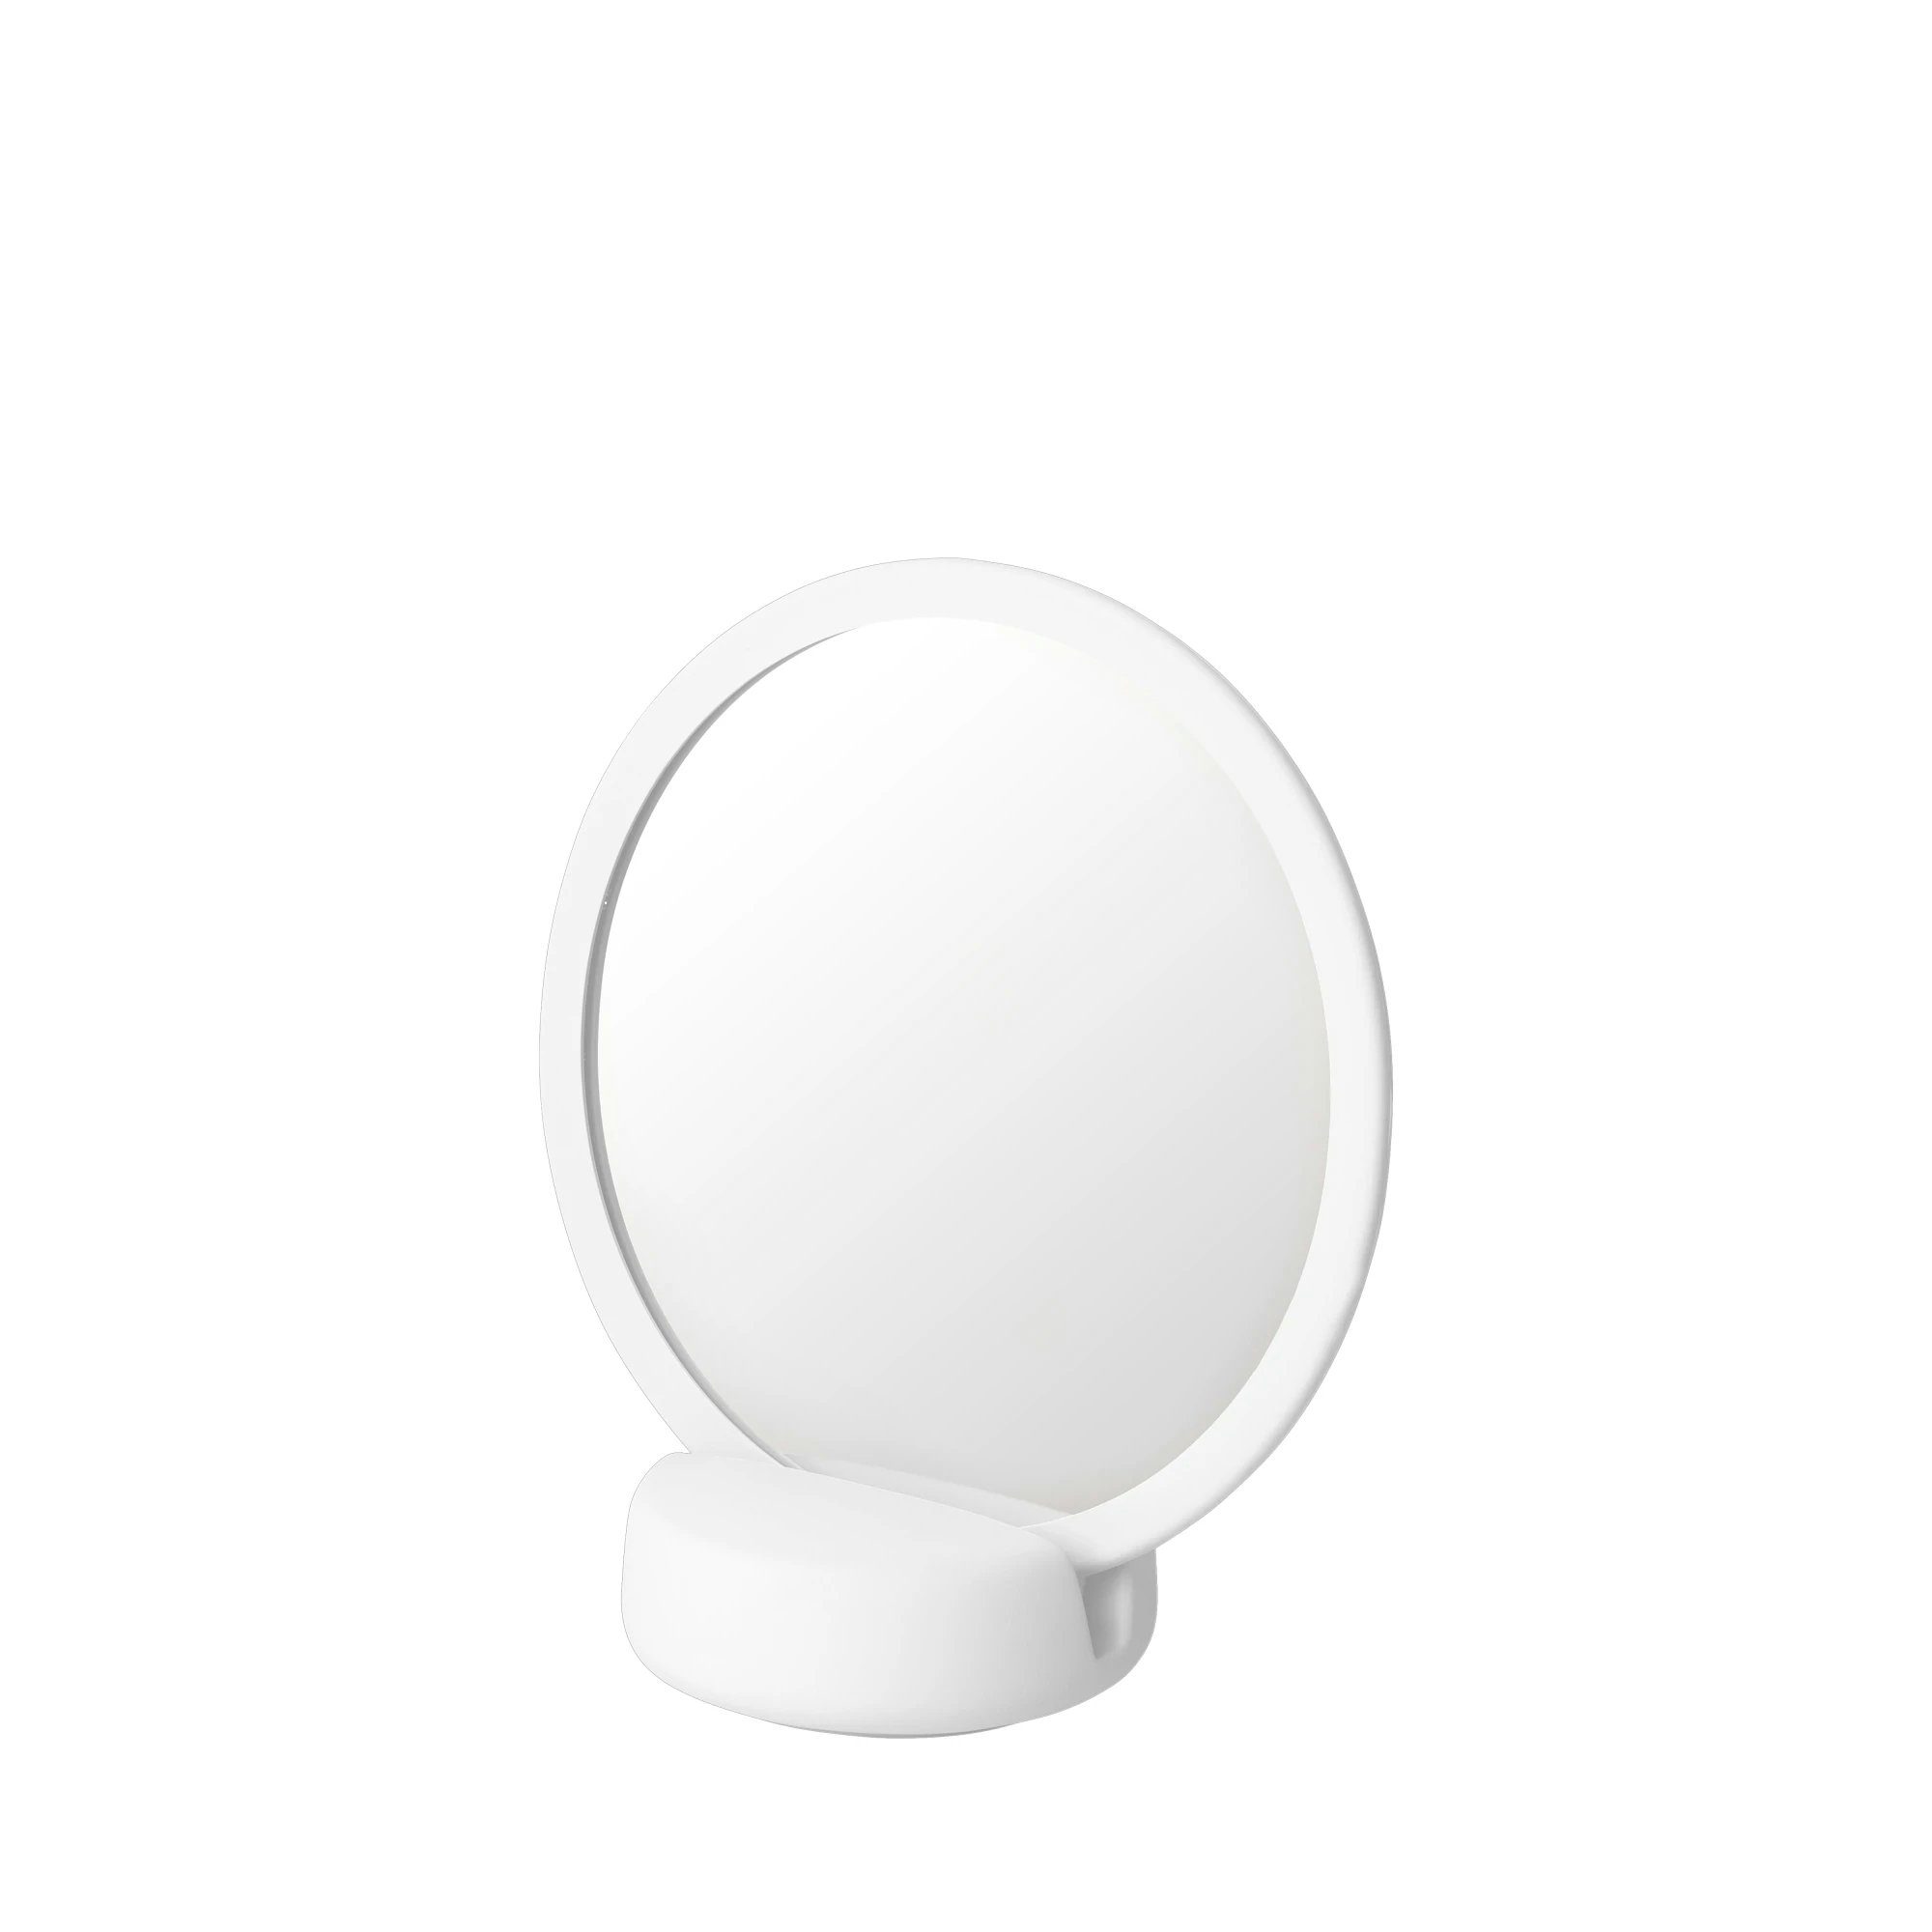 Kosmetikspiegel Kosmetikspiegel blomus -SONO- Weiß Blomus